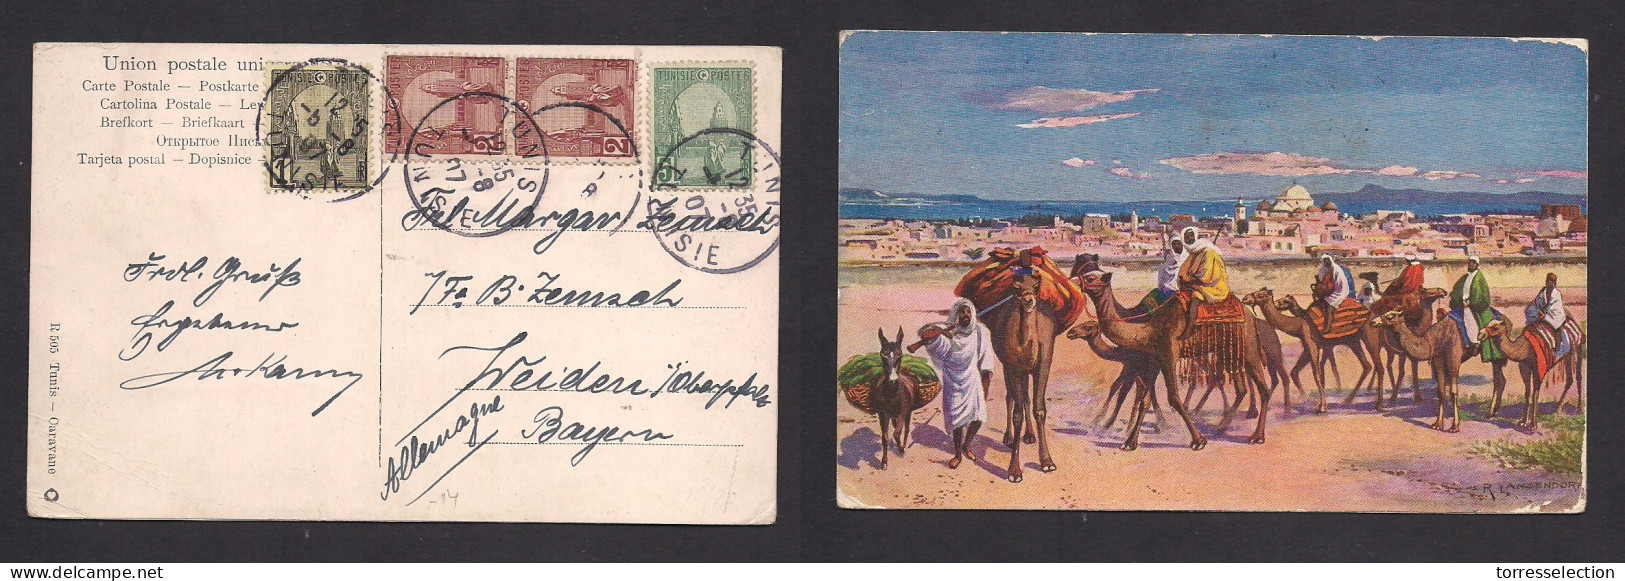 TUNISIA. 1907 (5 Aug) Tunis - Germany, Bayern, Weiden. Multicolor Fkd Pcard, Tied Cds. Fine. XSALE. - Tunisie (1956-...)